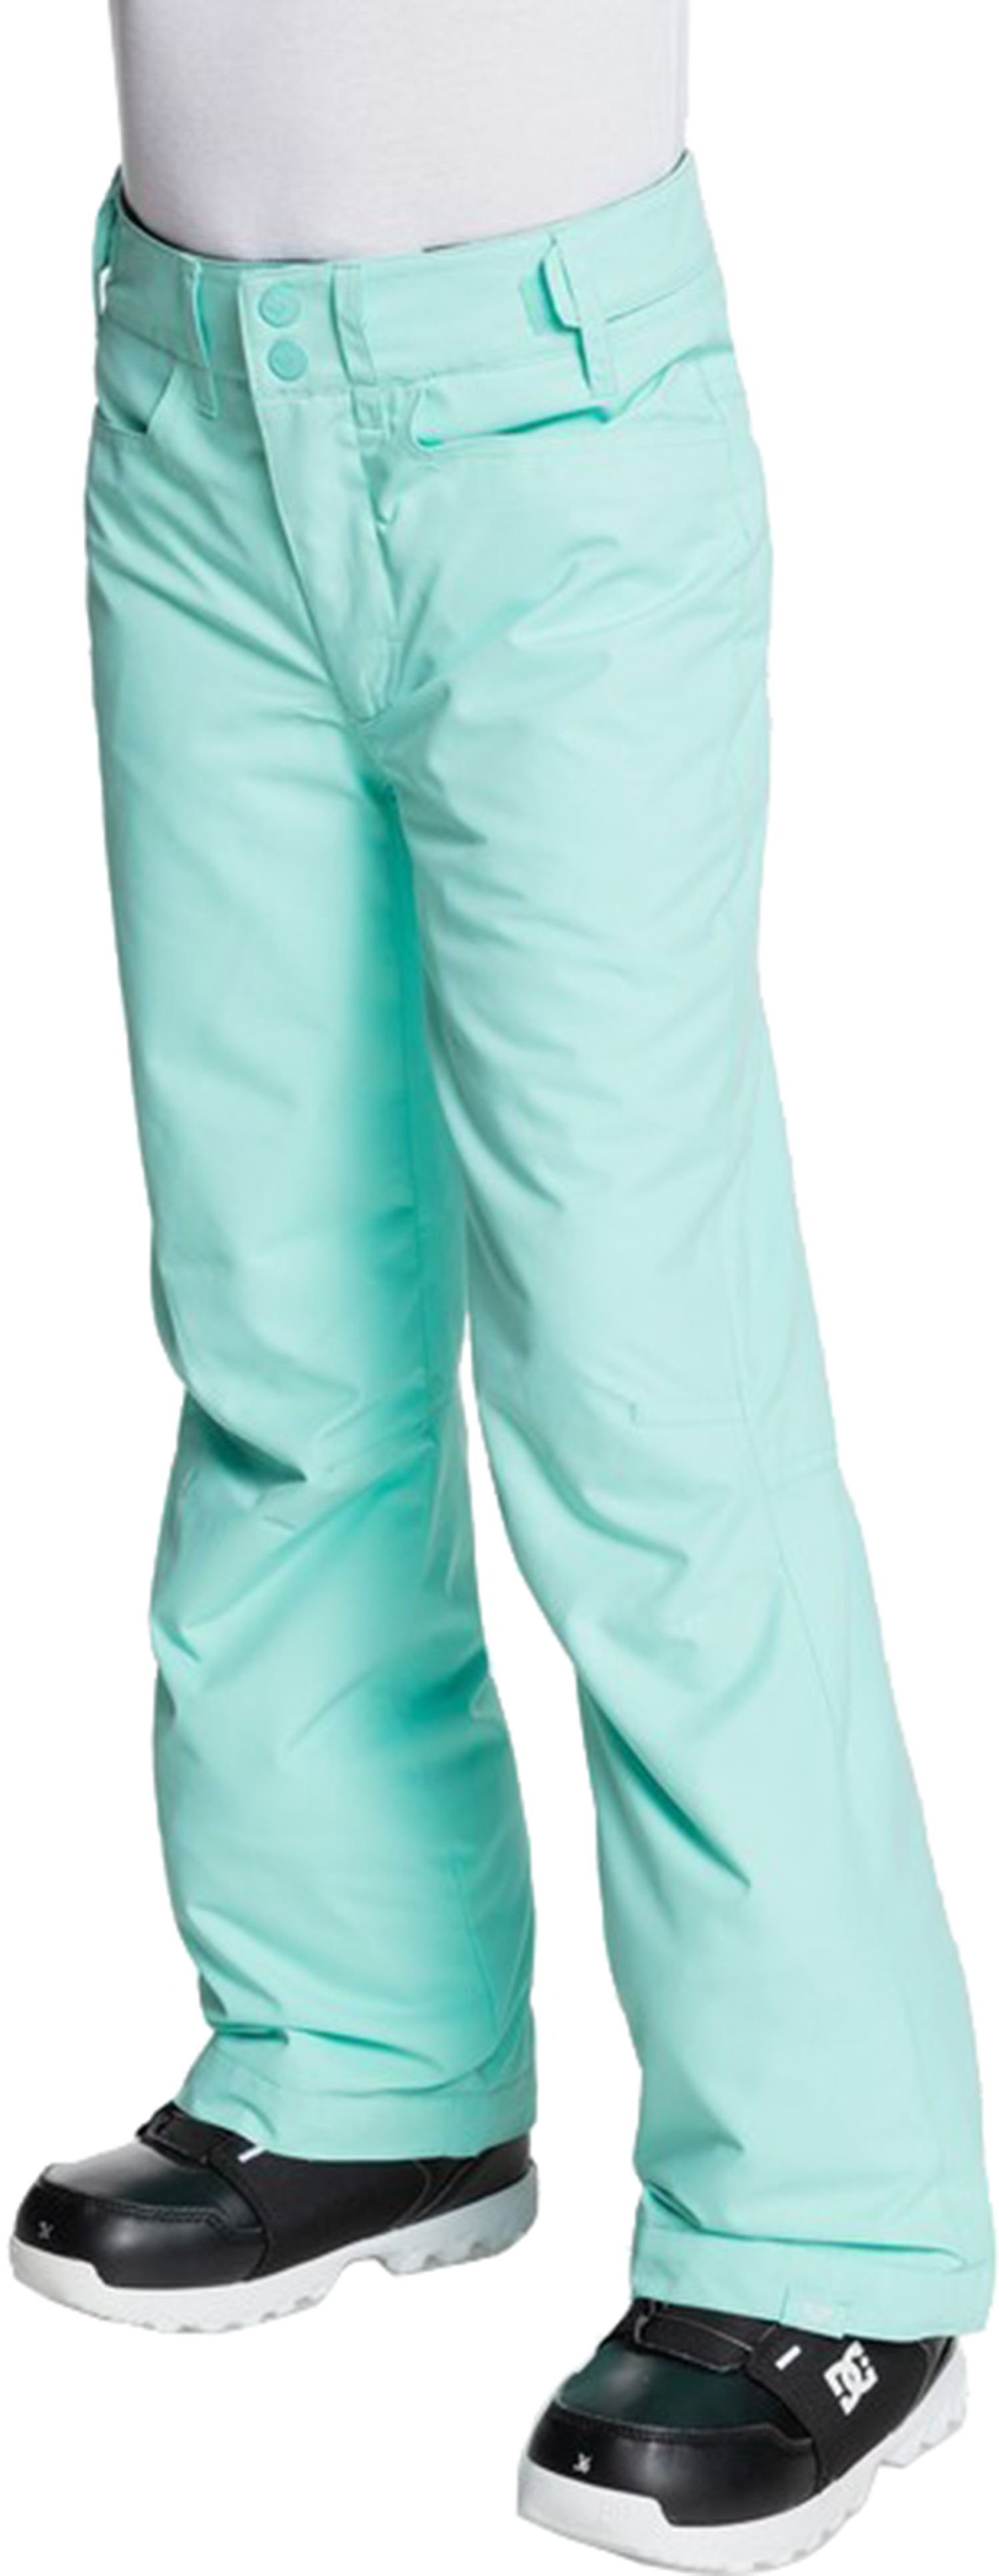 Штаны для сноуборда Roxy ERJTP03091 Backyard Harbor Gray, цвет белый-зеленый, размер S BFR0 - фото 4